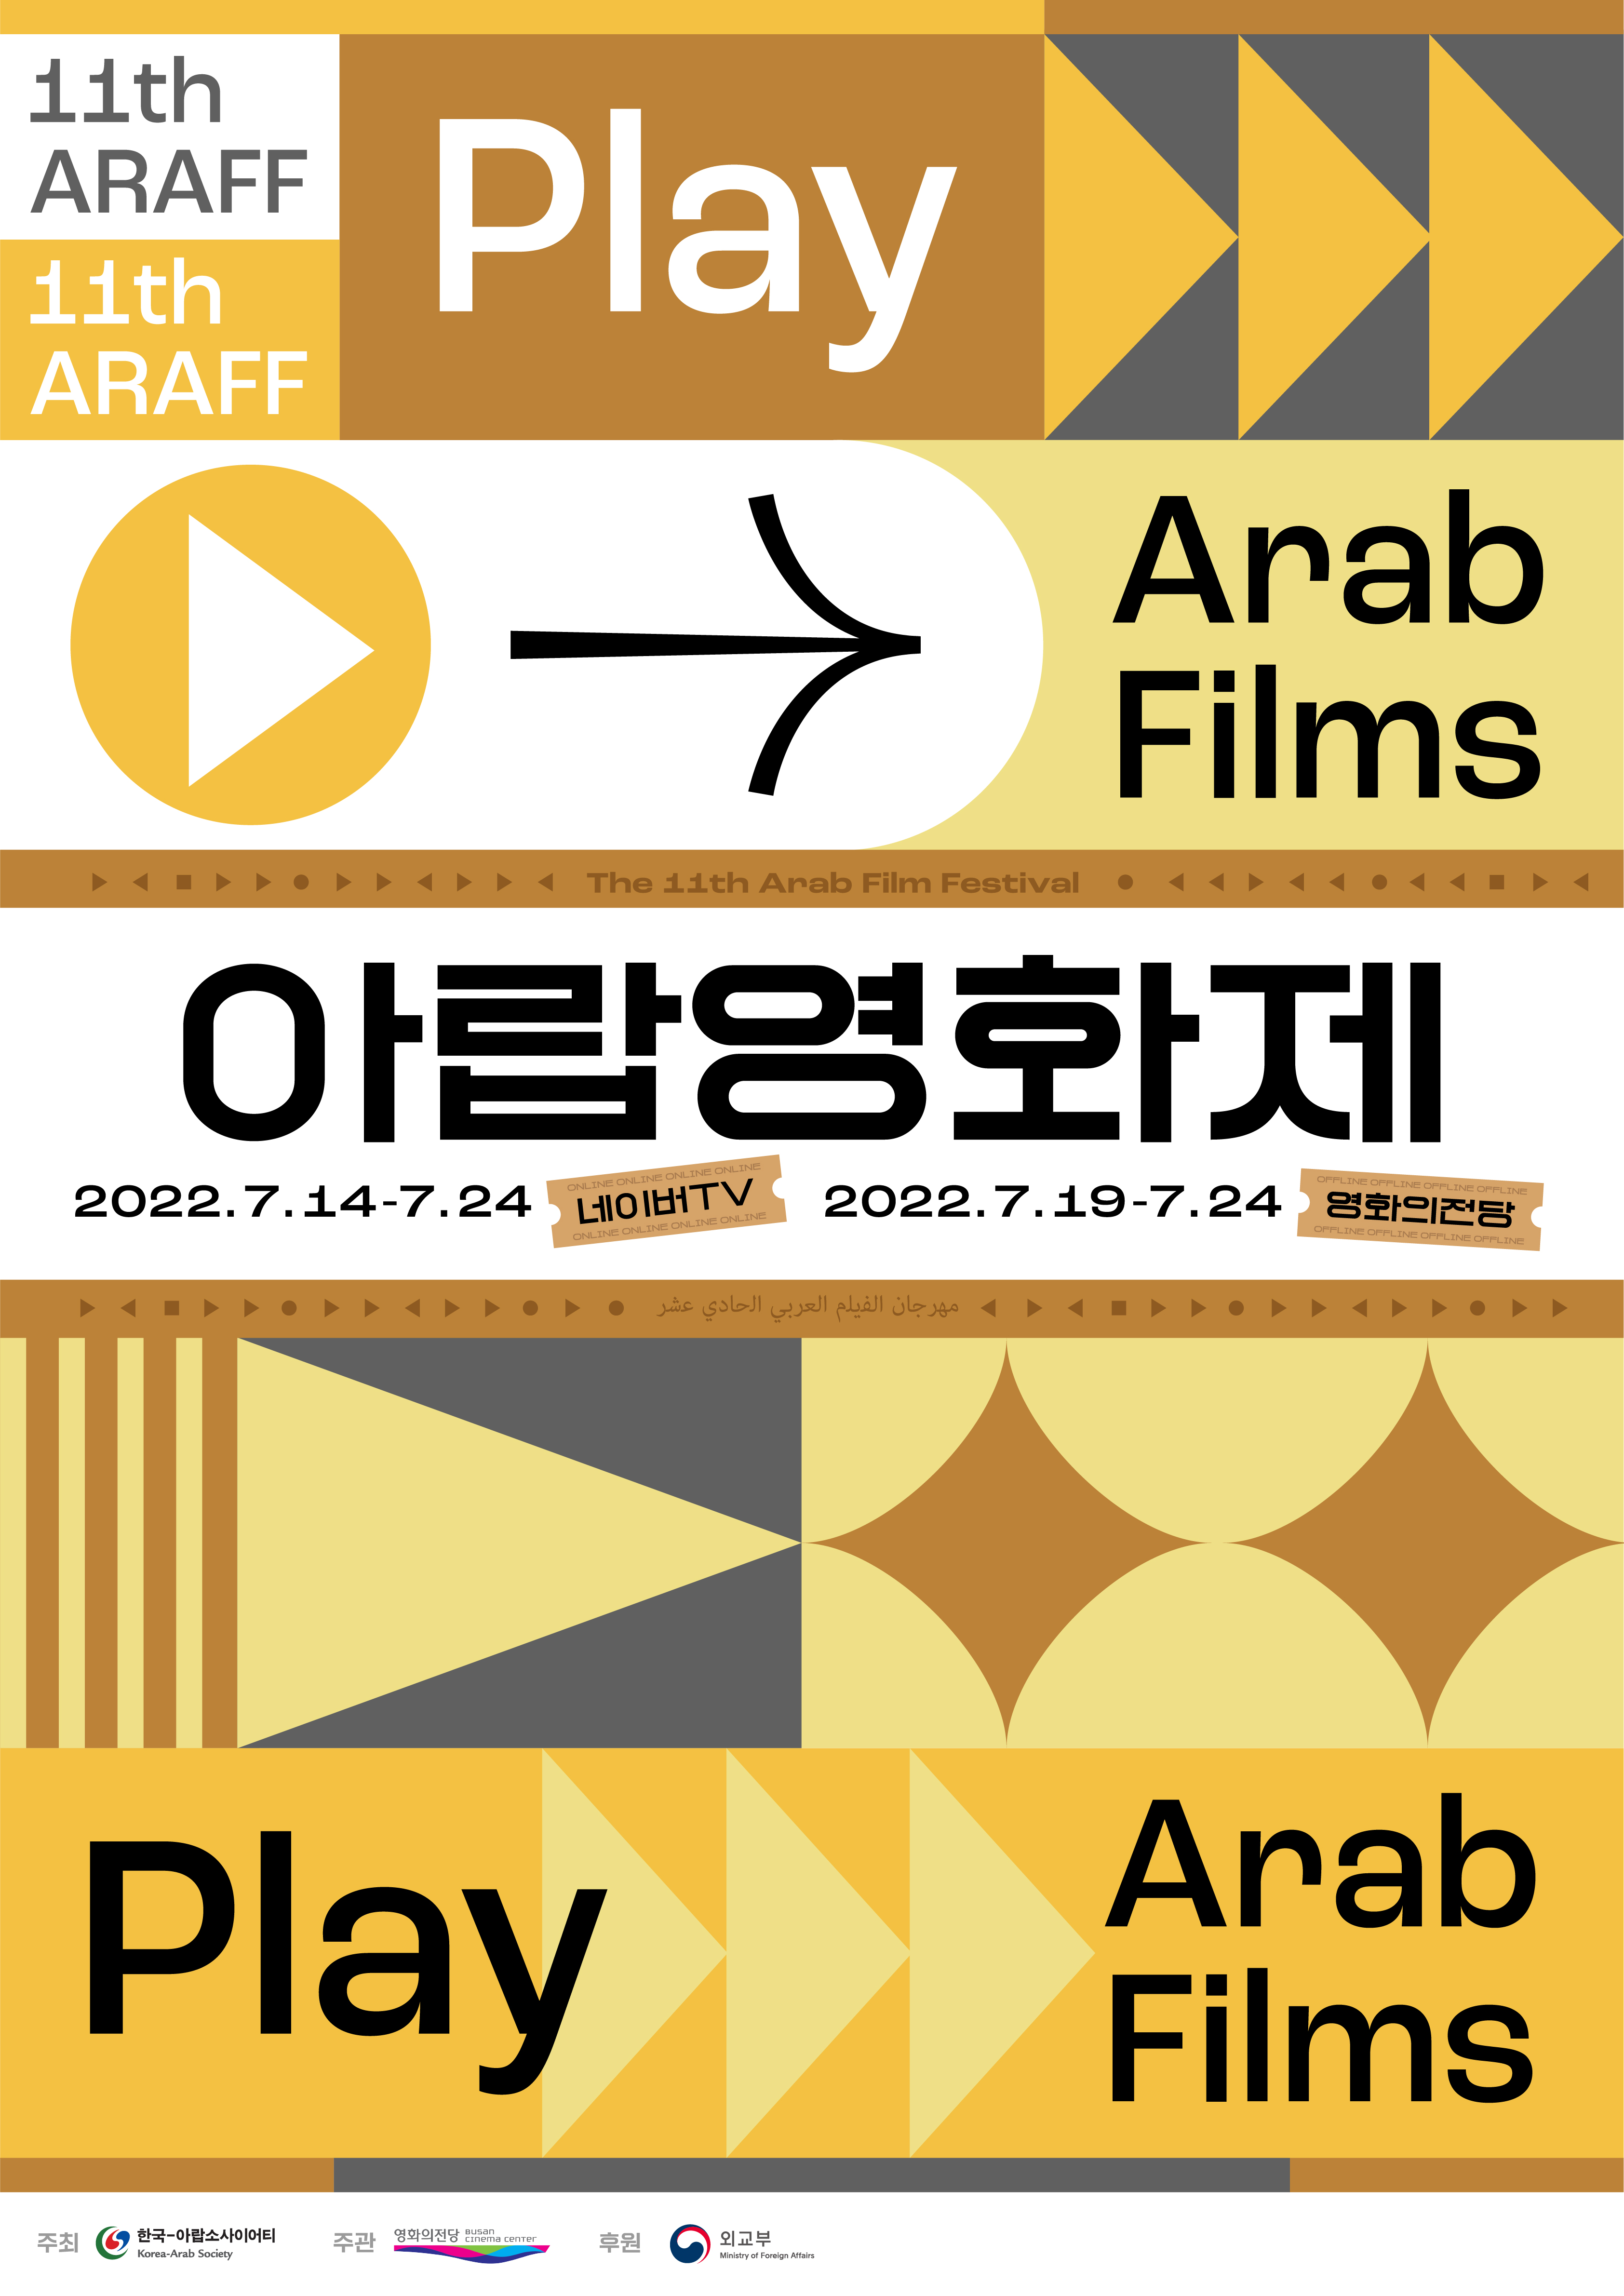 11th ARAFF PLAY Arab Flims Festival 아랍영화제, 2022.7.14.(목)-7.24.(일) 네이버TV, 2022.7.19.(화)~7.24.(월) 영화의전당